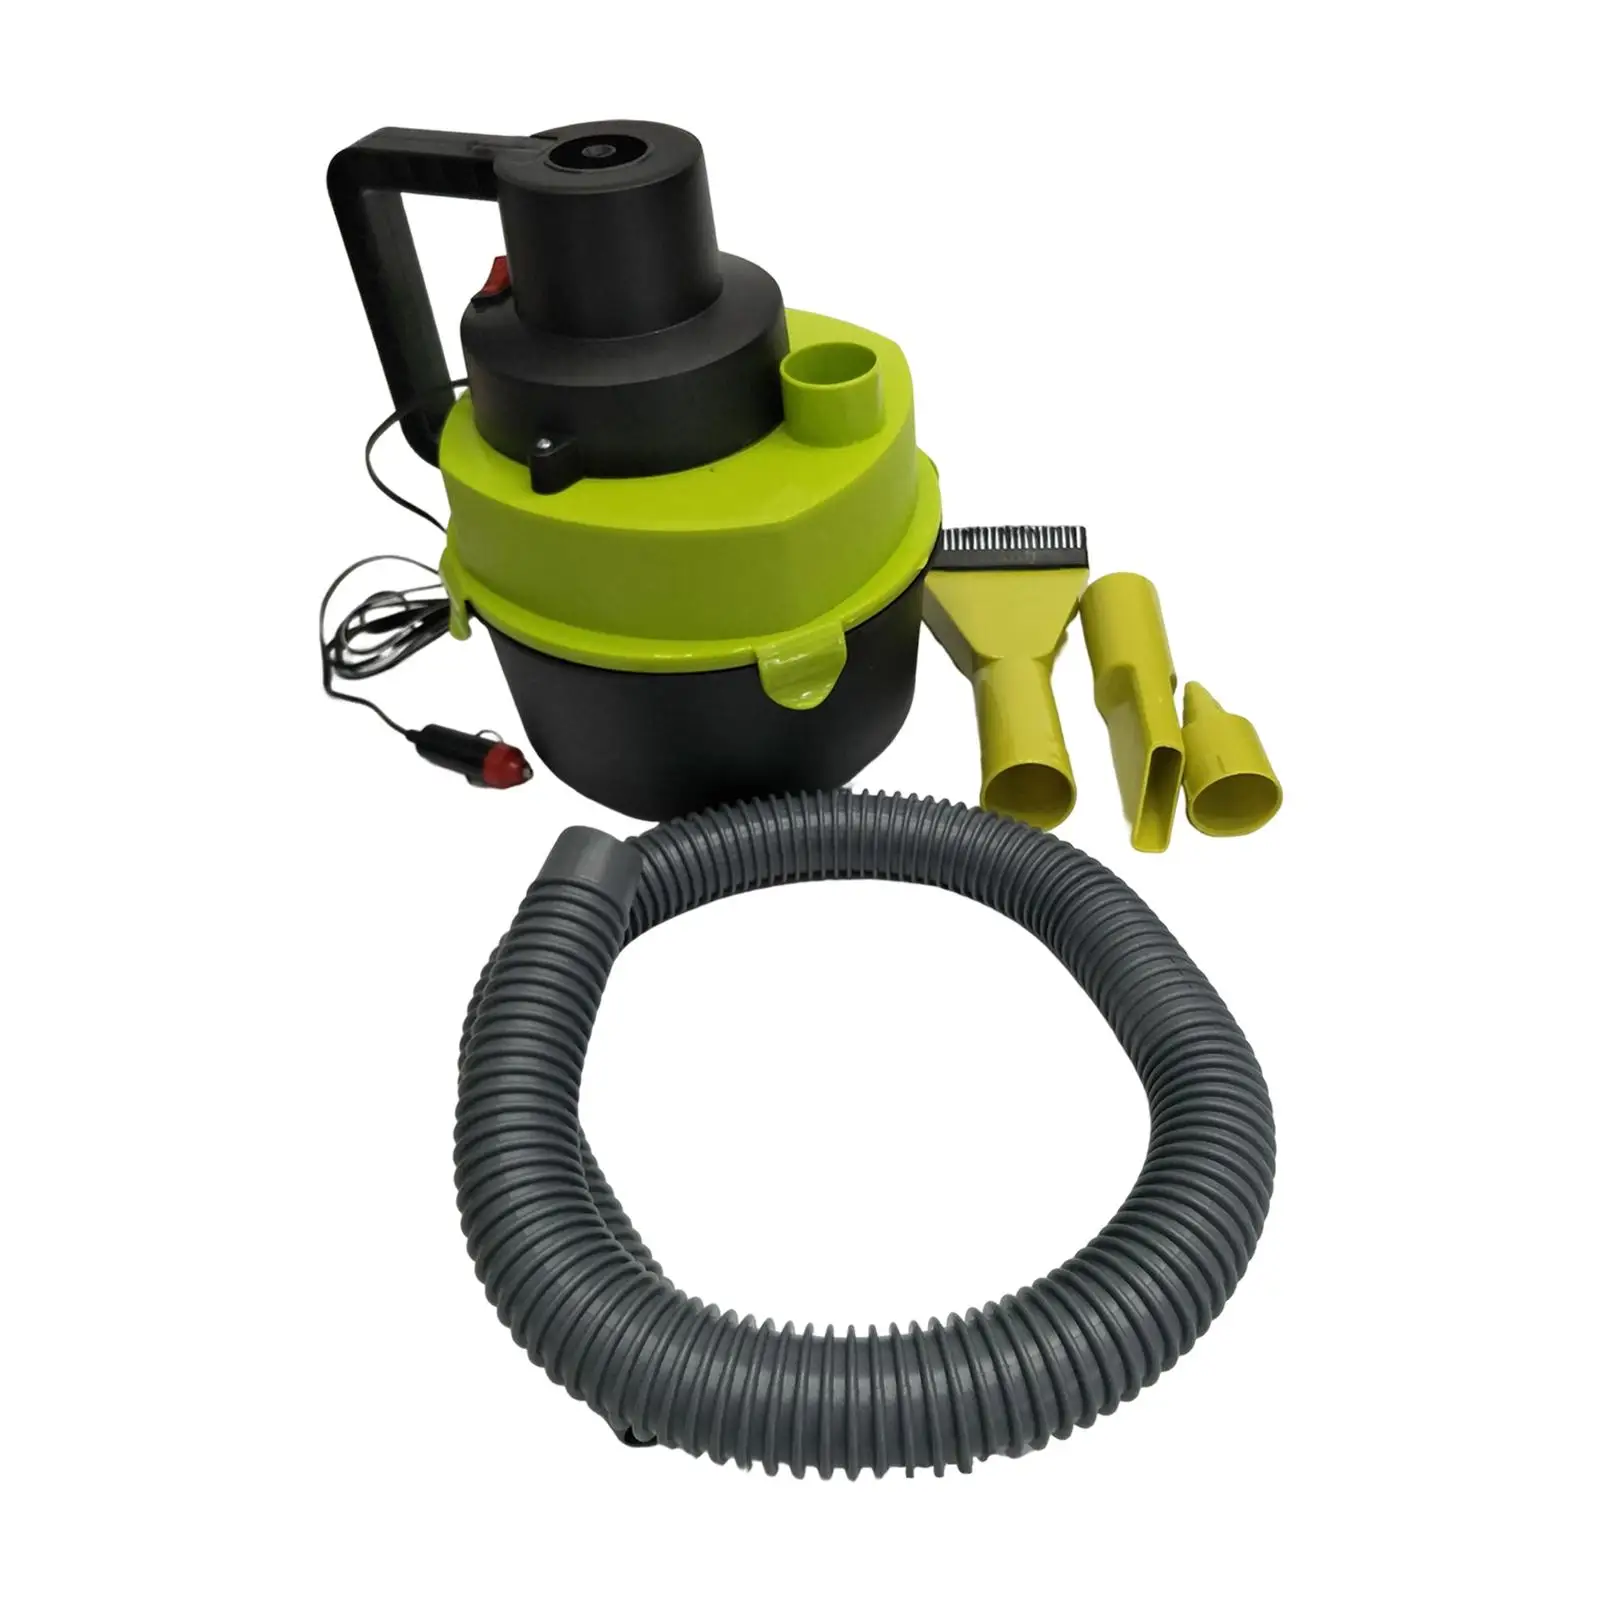 Shop Vacuum Cleaner Liquid Debris Dual Use 4L Portable Shop Vacuum with Attachments for Carpet Window Seams Trucks Cars Basement